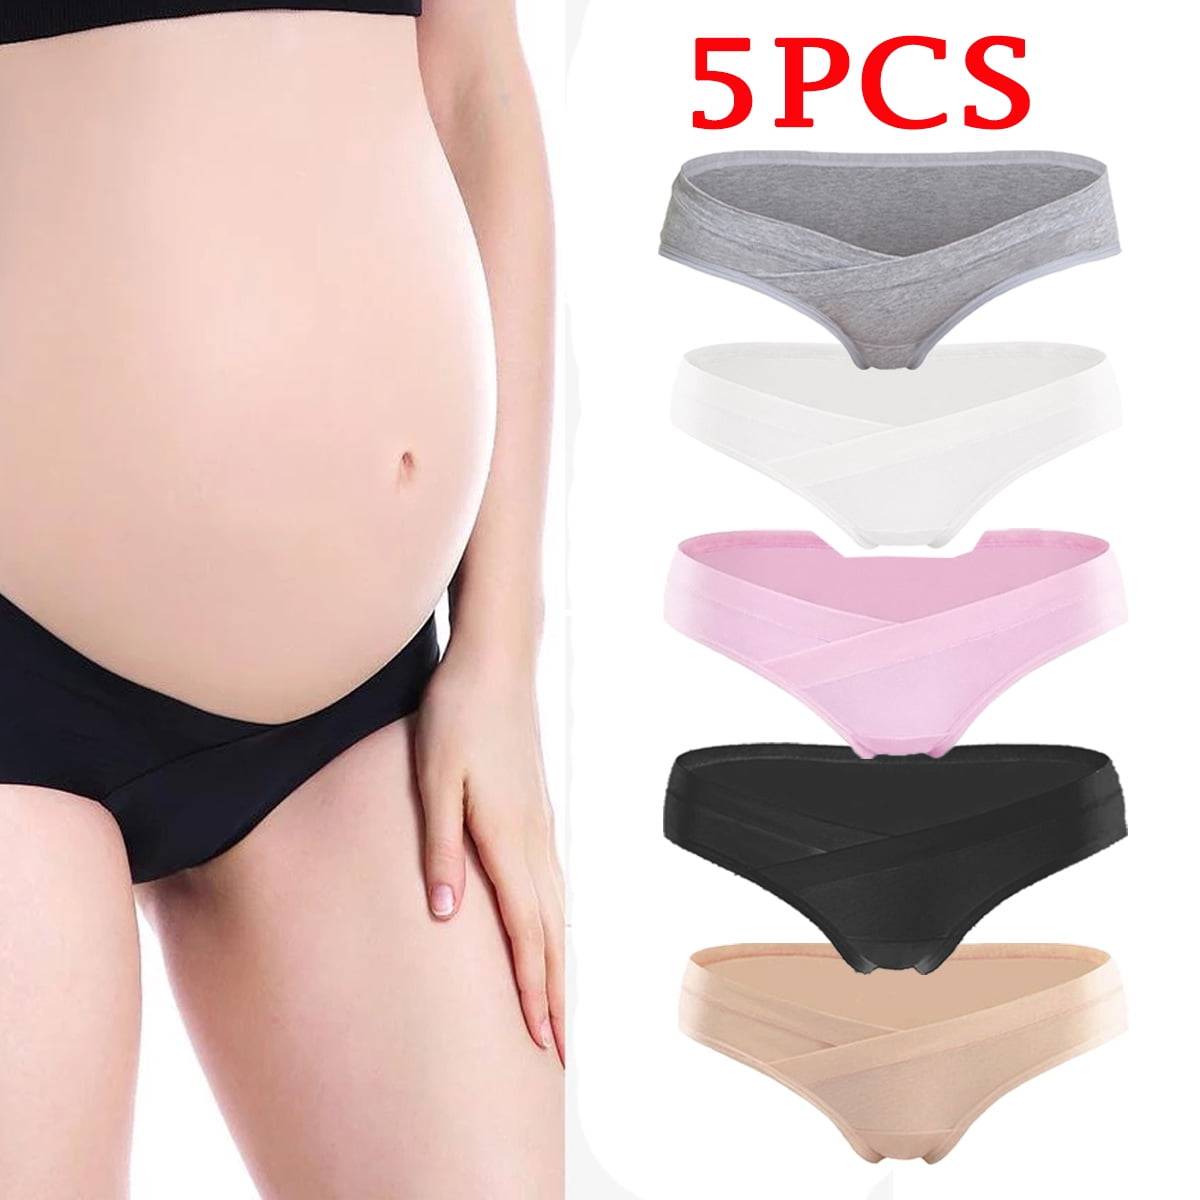 5pcs High Waist Comfortable Soft Maternity Underwear.